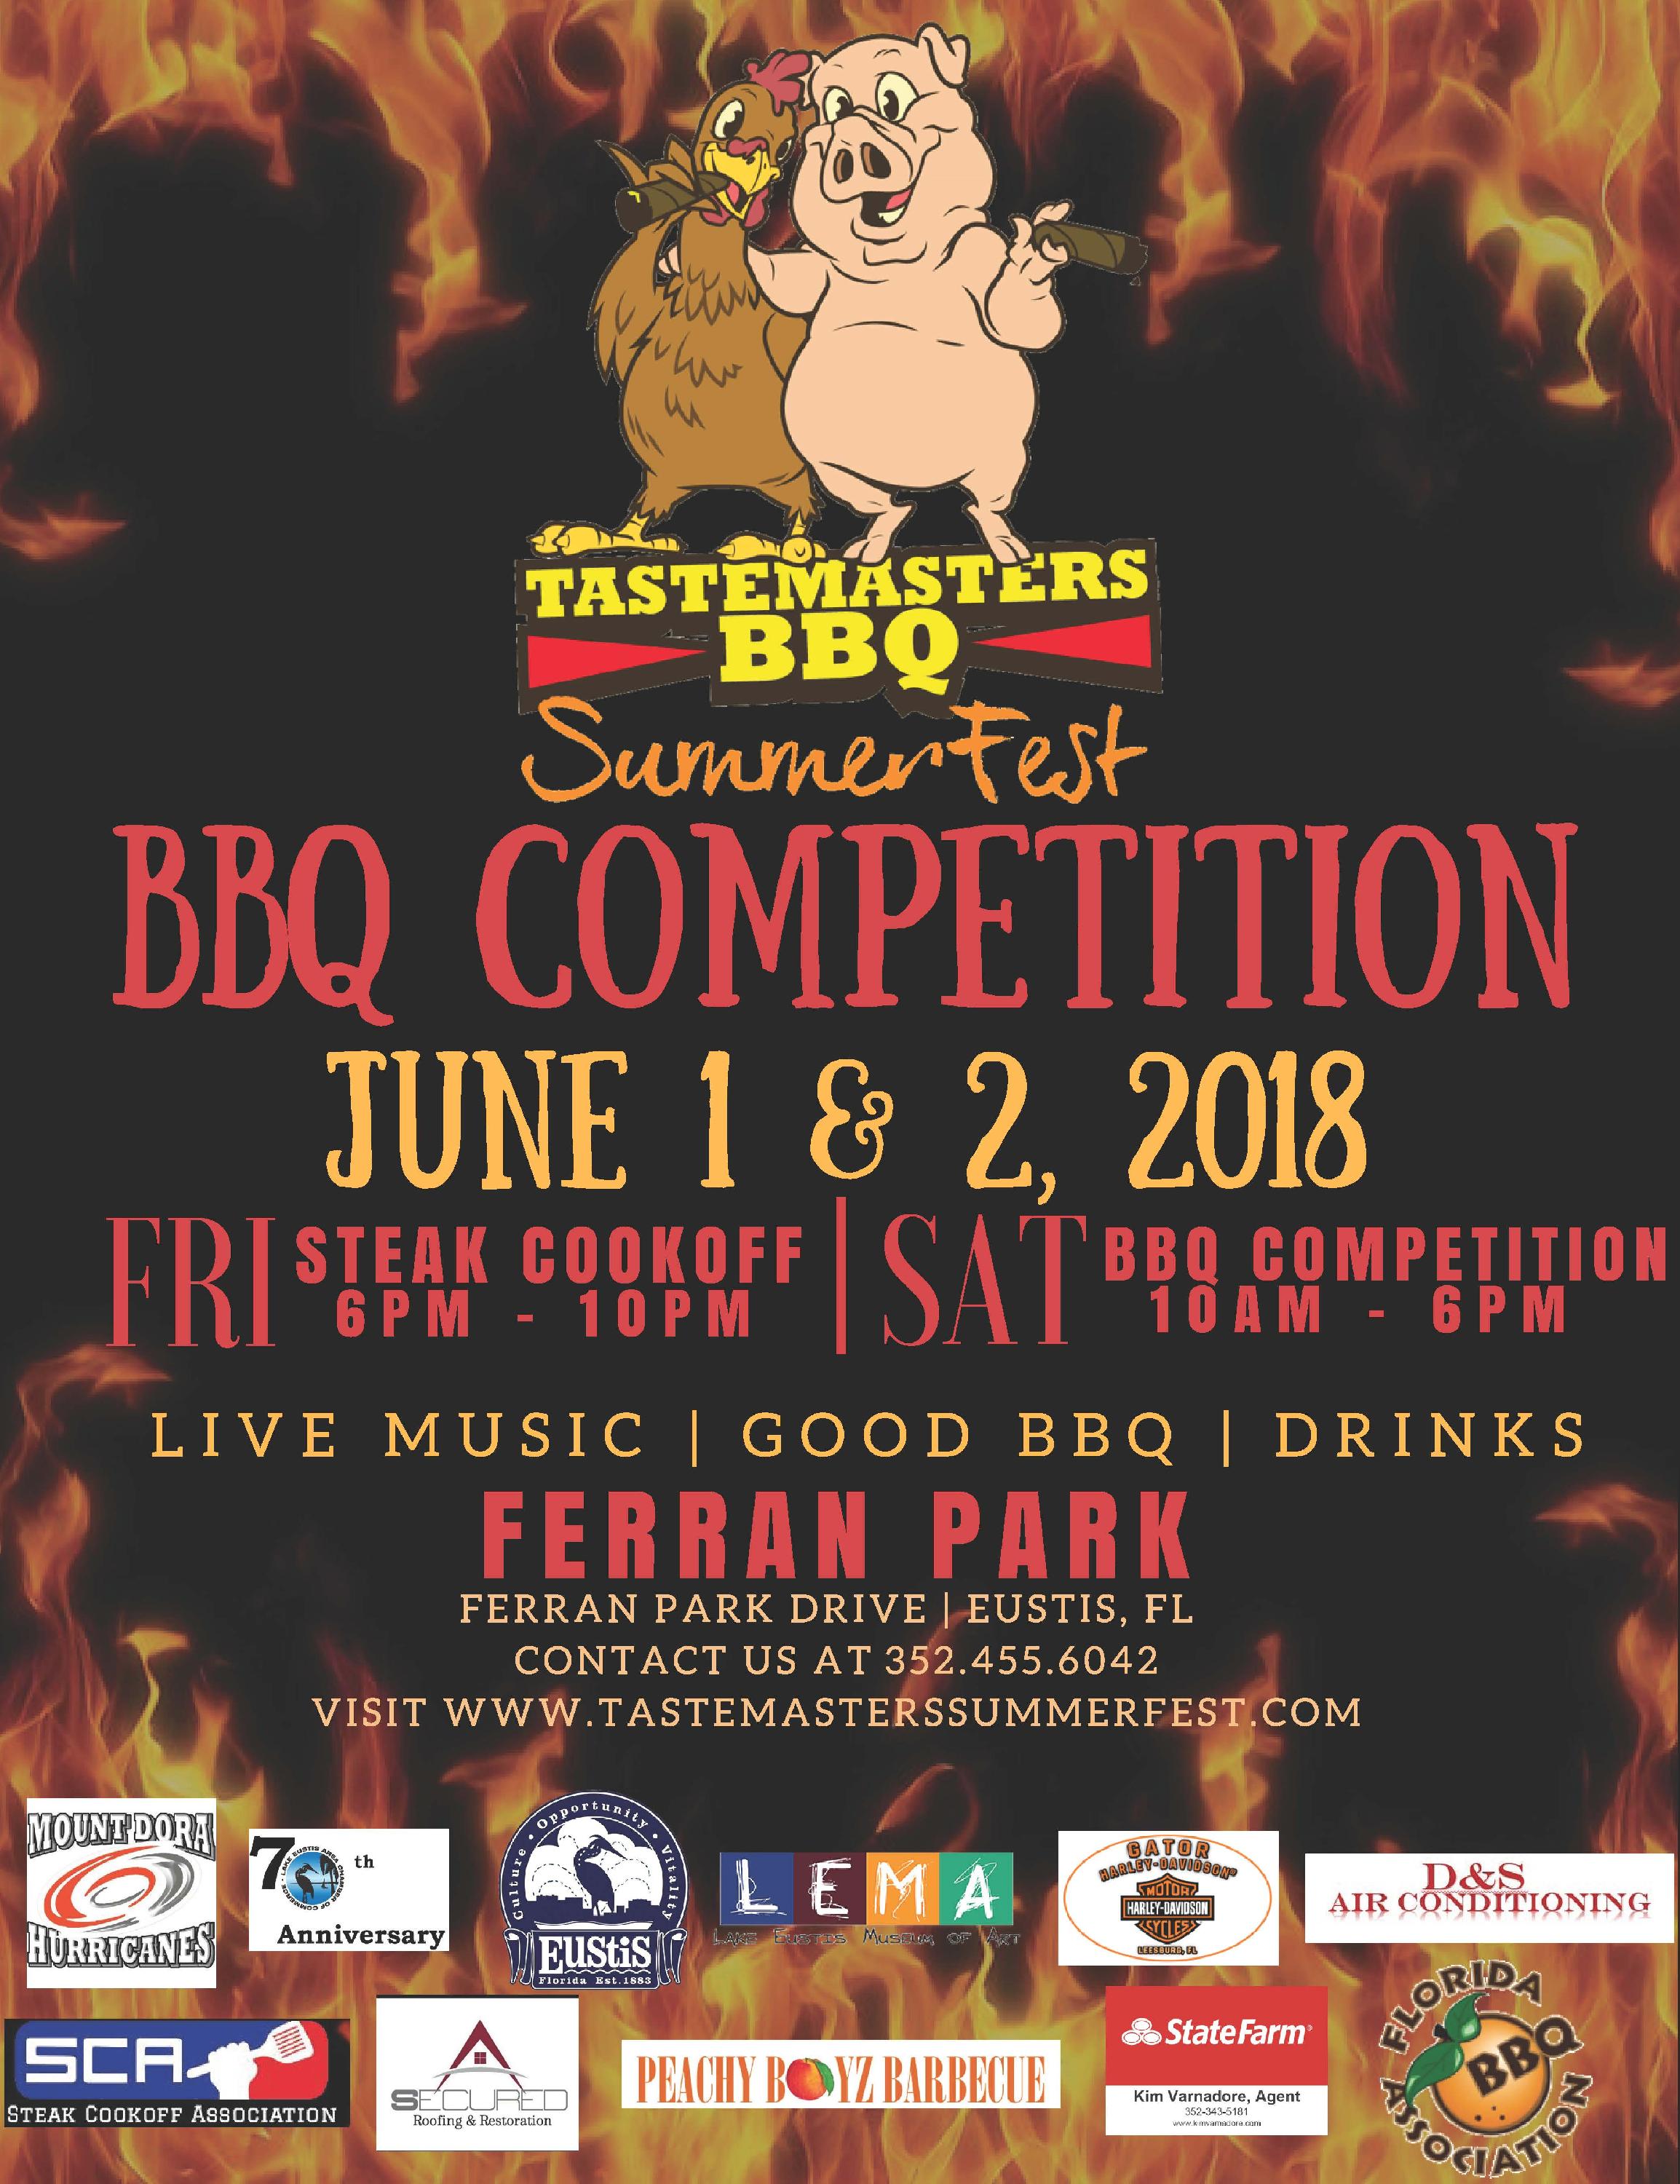 Eustis, FL Tastemaster BBQ Competition fun event to enj